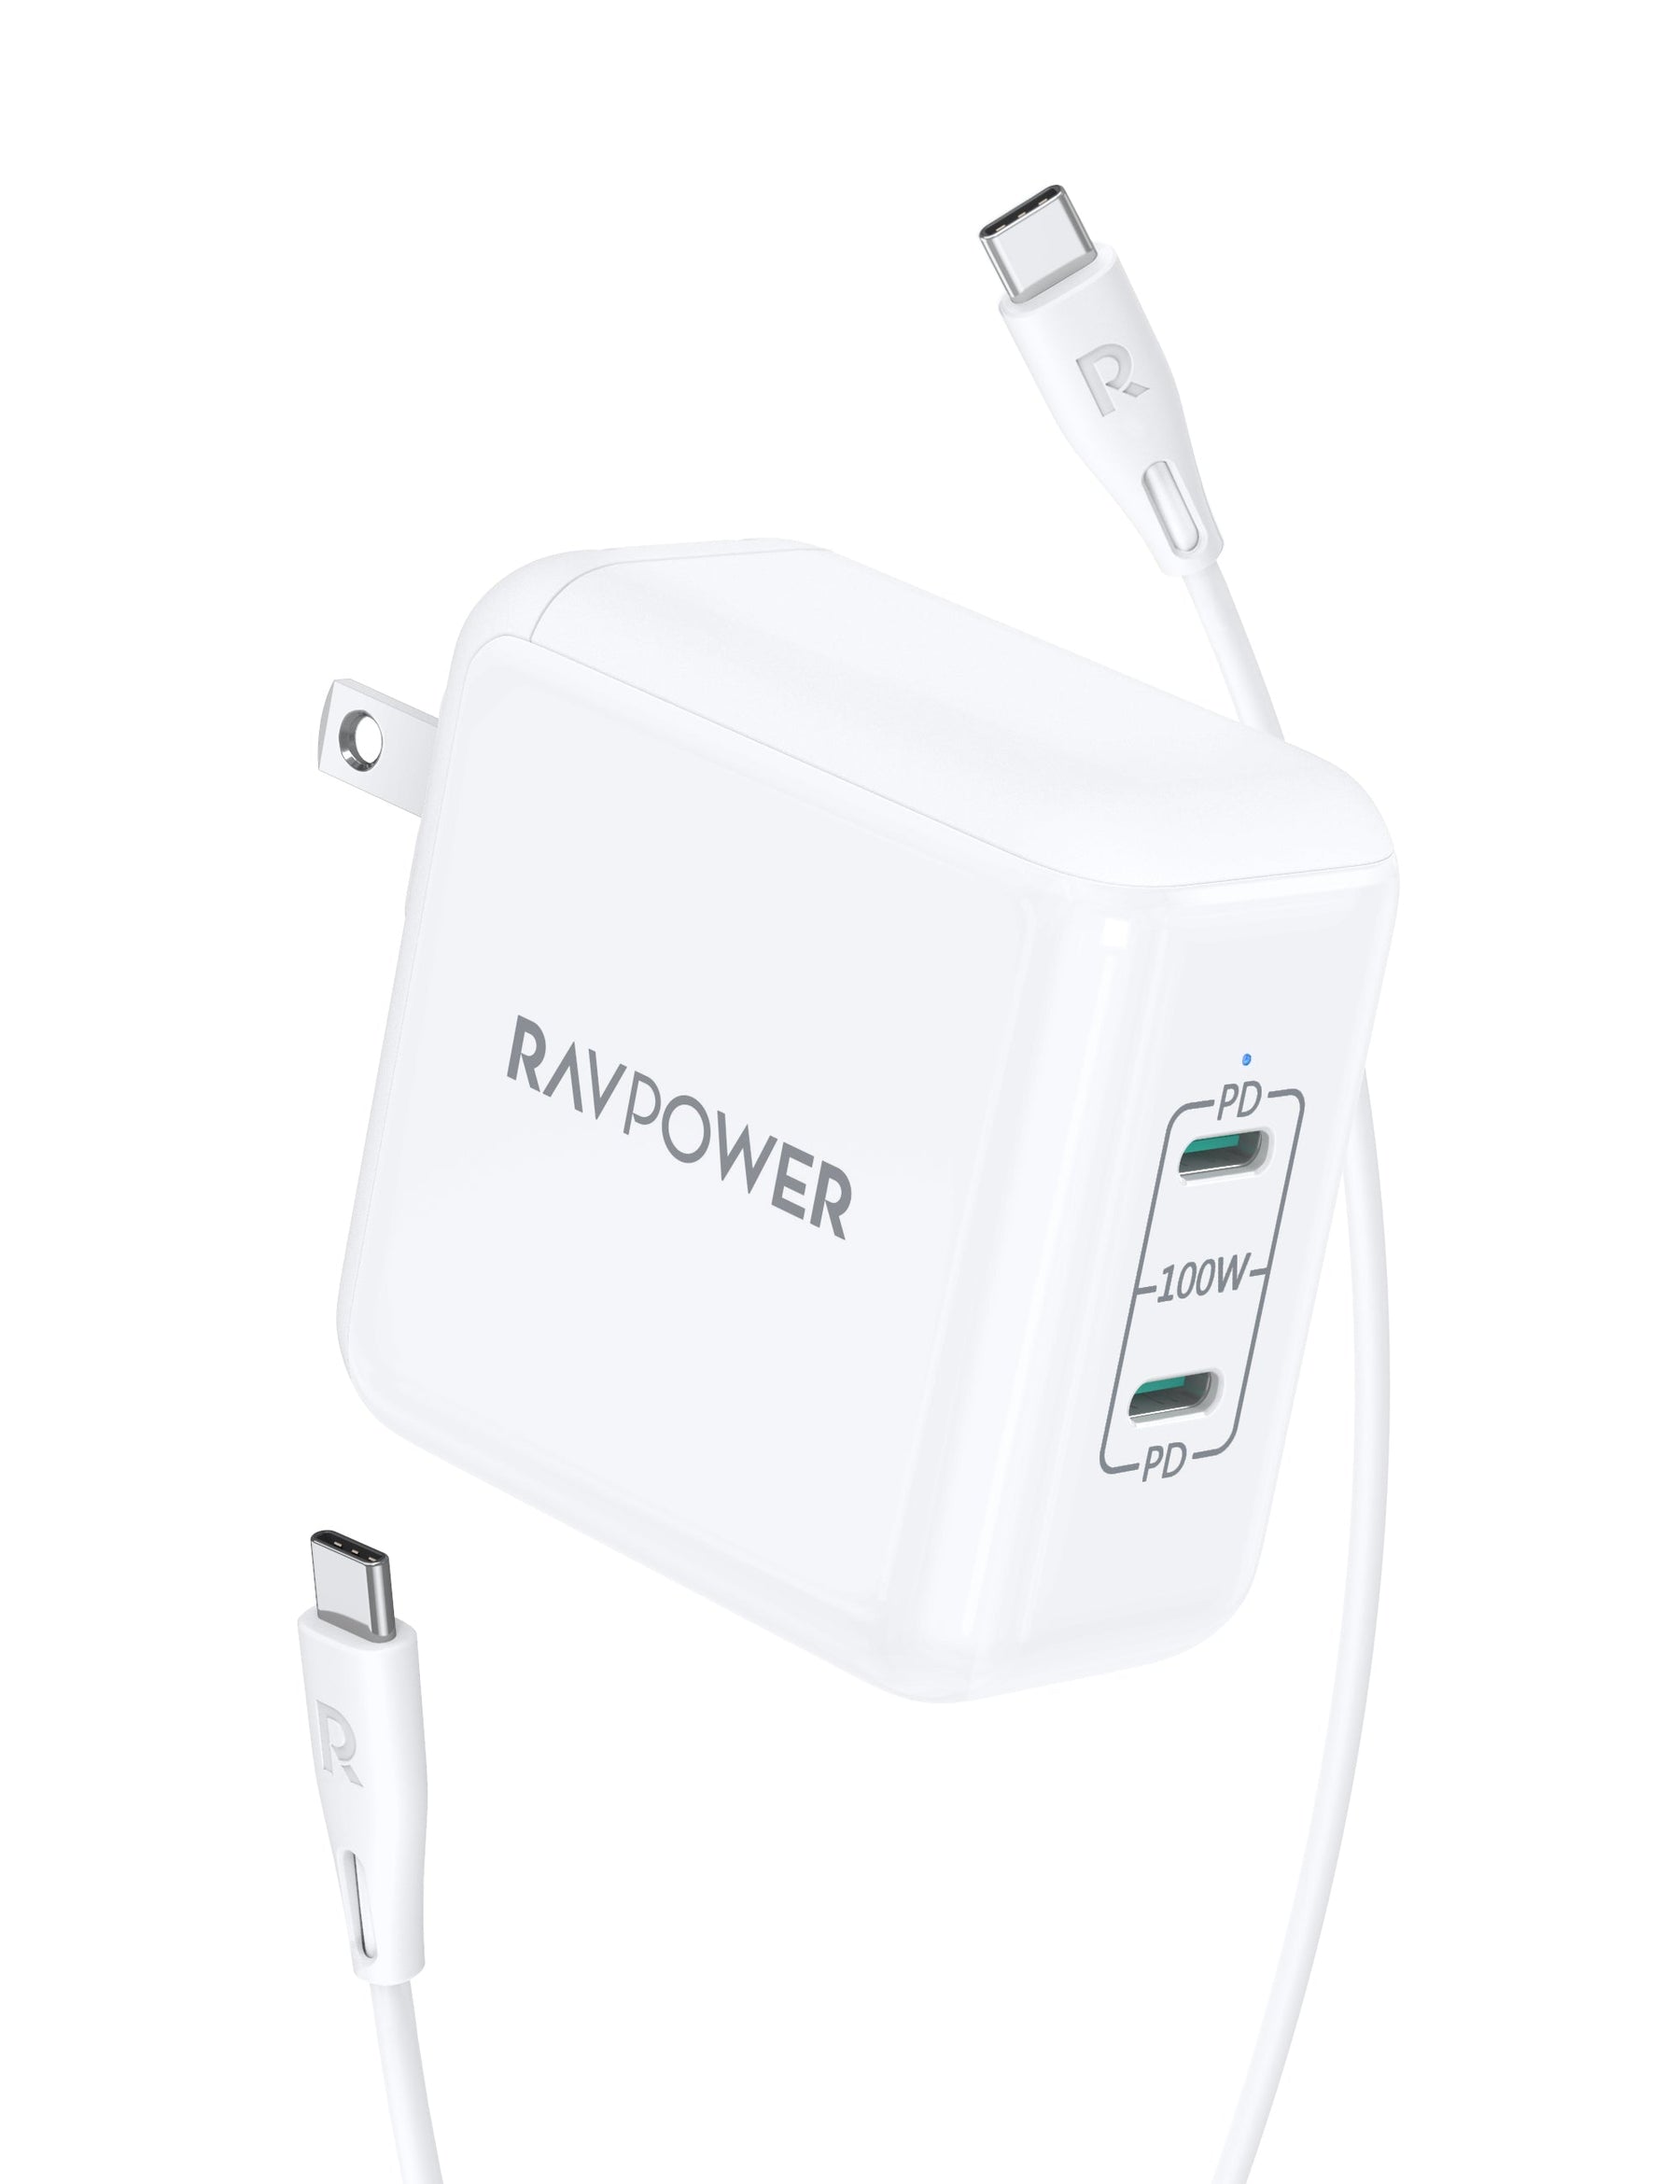 Chargeur USB-C Power Delivery (100W) - USB - Garantie 3 ans LDLC